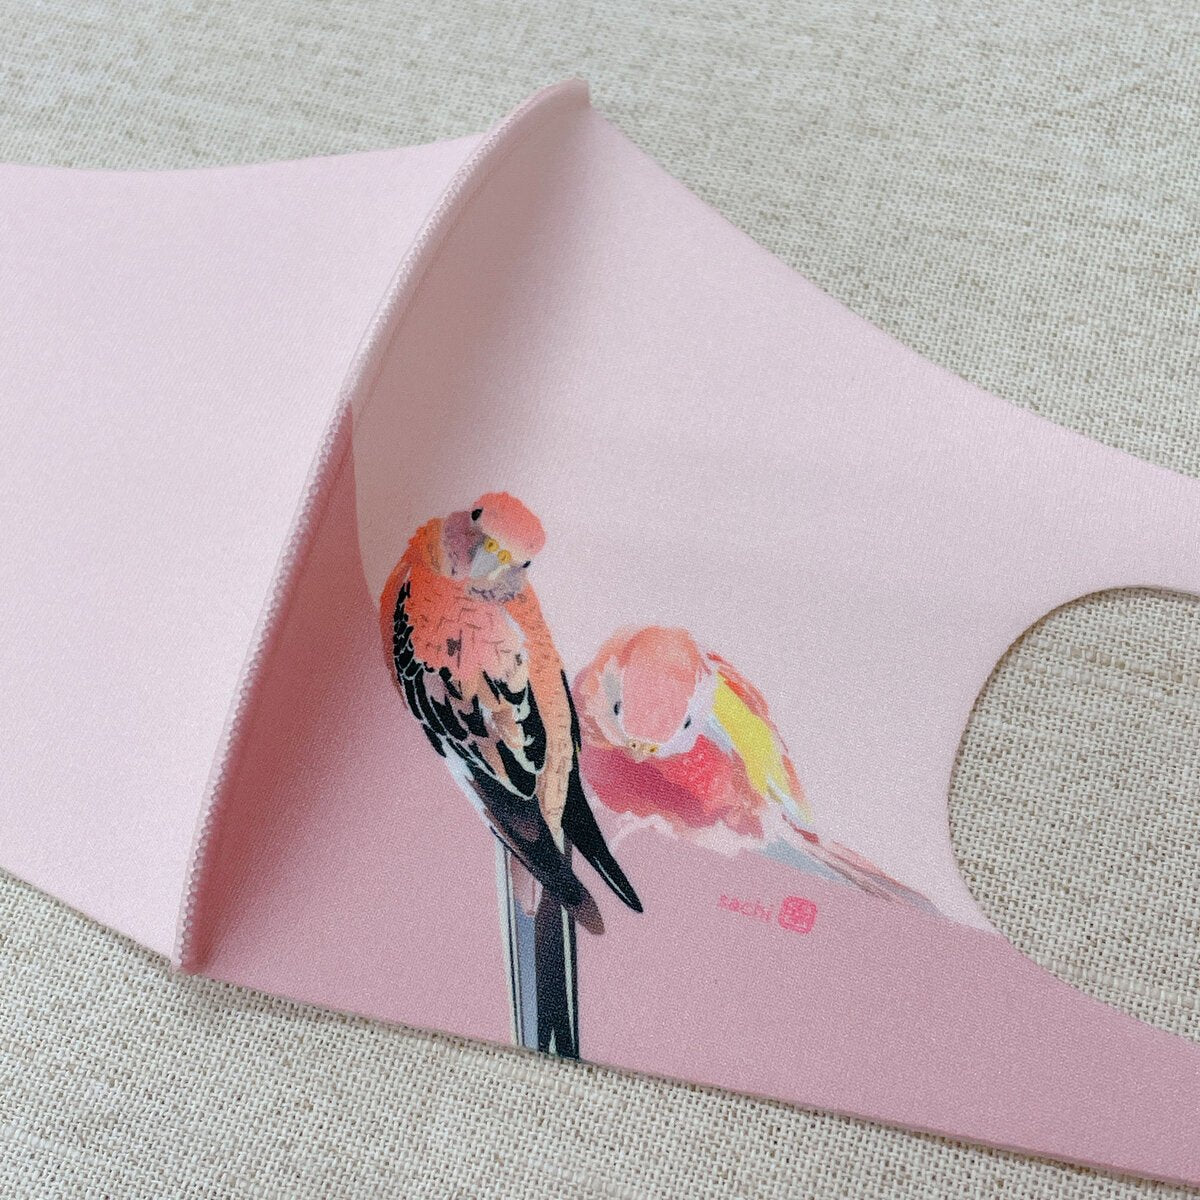 Bourke's Parakeet Reusable Face Mask Medium Size for Women & Children